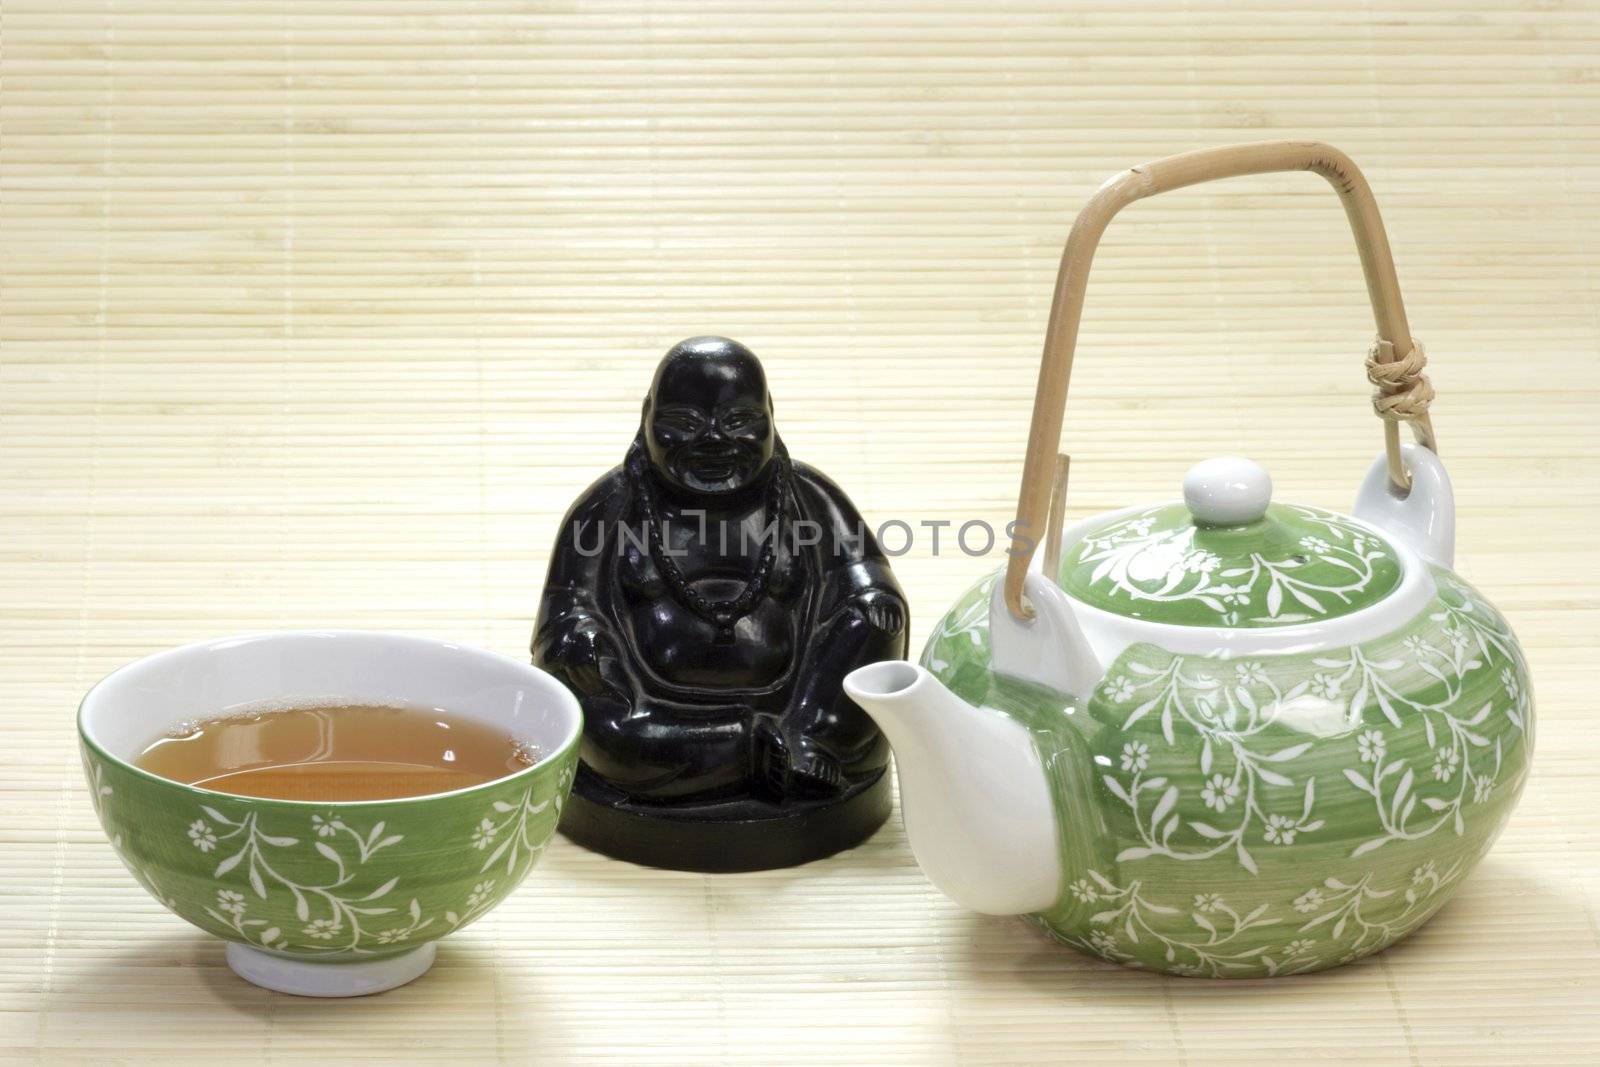 Green tea in a mug with teapot and buddha figure